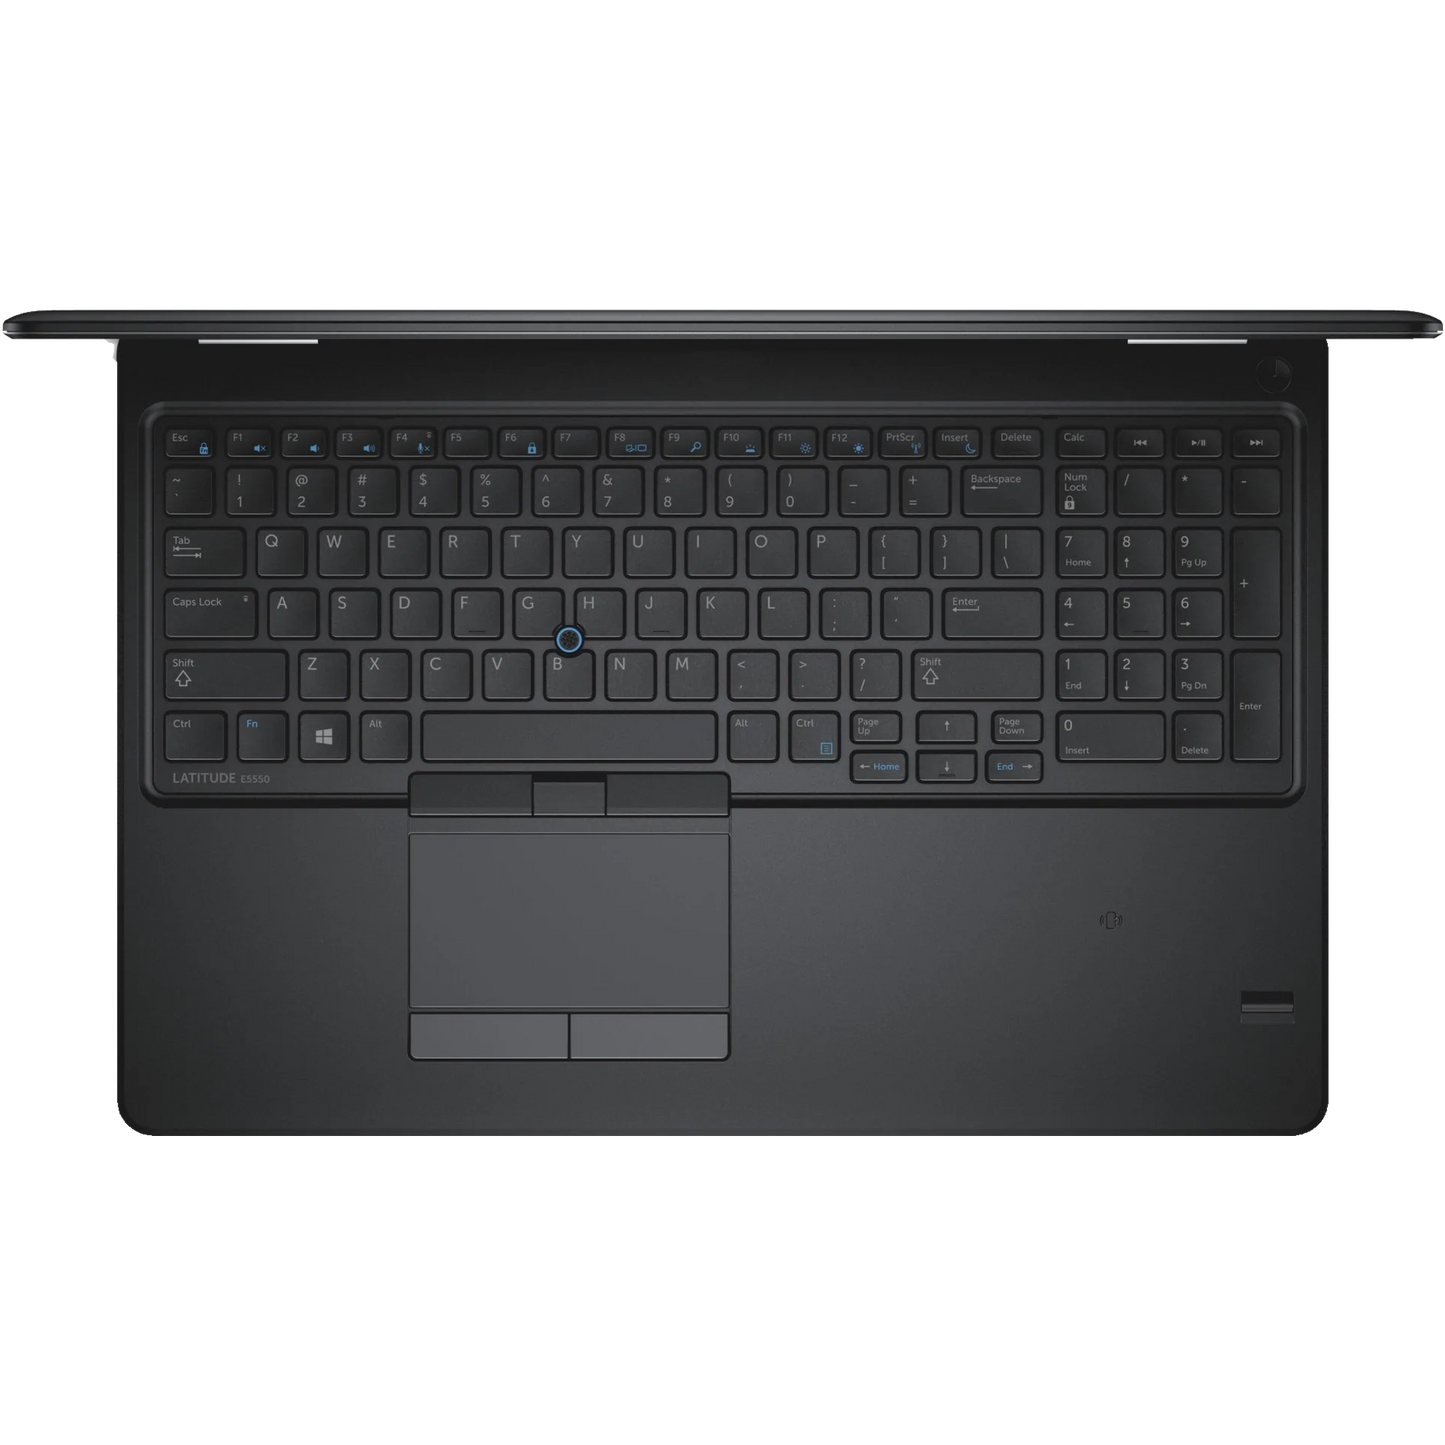 Dell Latitude 5550 Intel i7, 5th Gen Laptop with 8GB Ram + NumPad Laptops - Refurbished